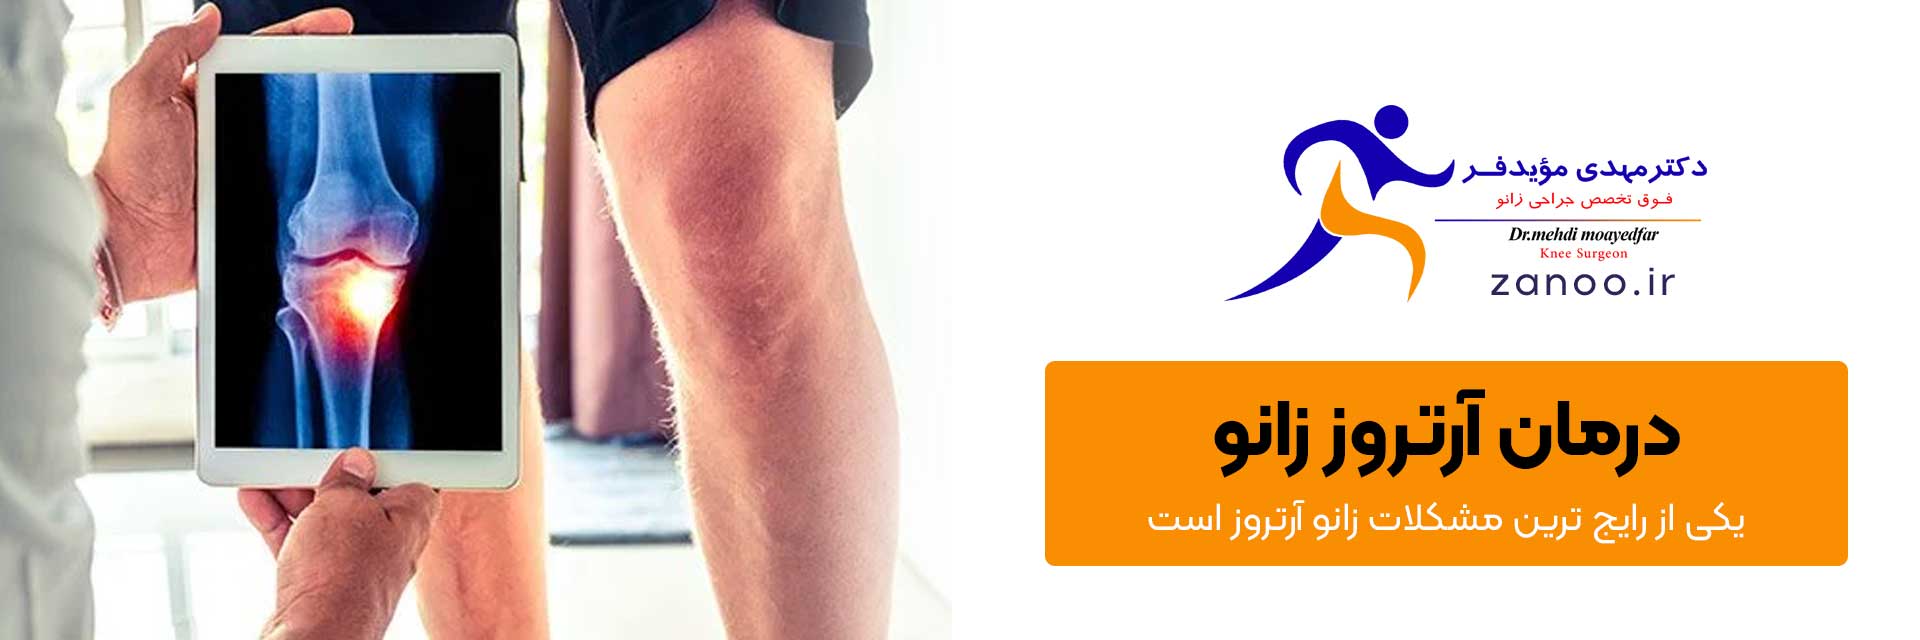 knee-arthritis، درمان آرتروز زانو در اصفهان، بهترین دکتر تعویض مفصل زانو اصفهان، دکتر خوب زانو در اصفهان